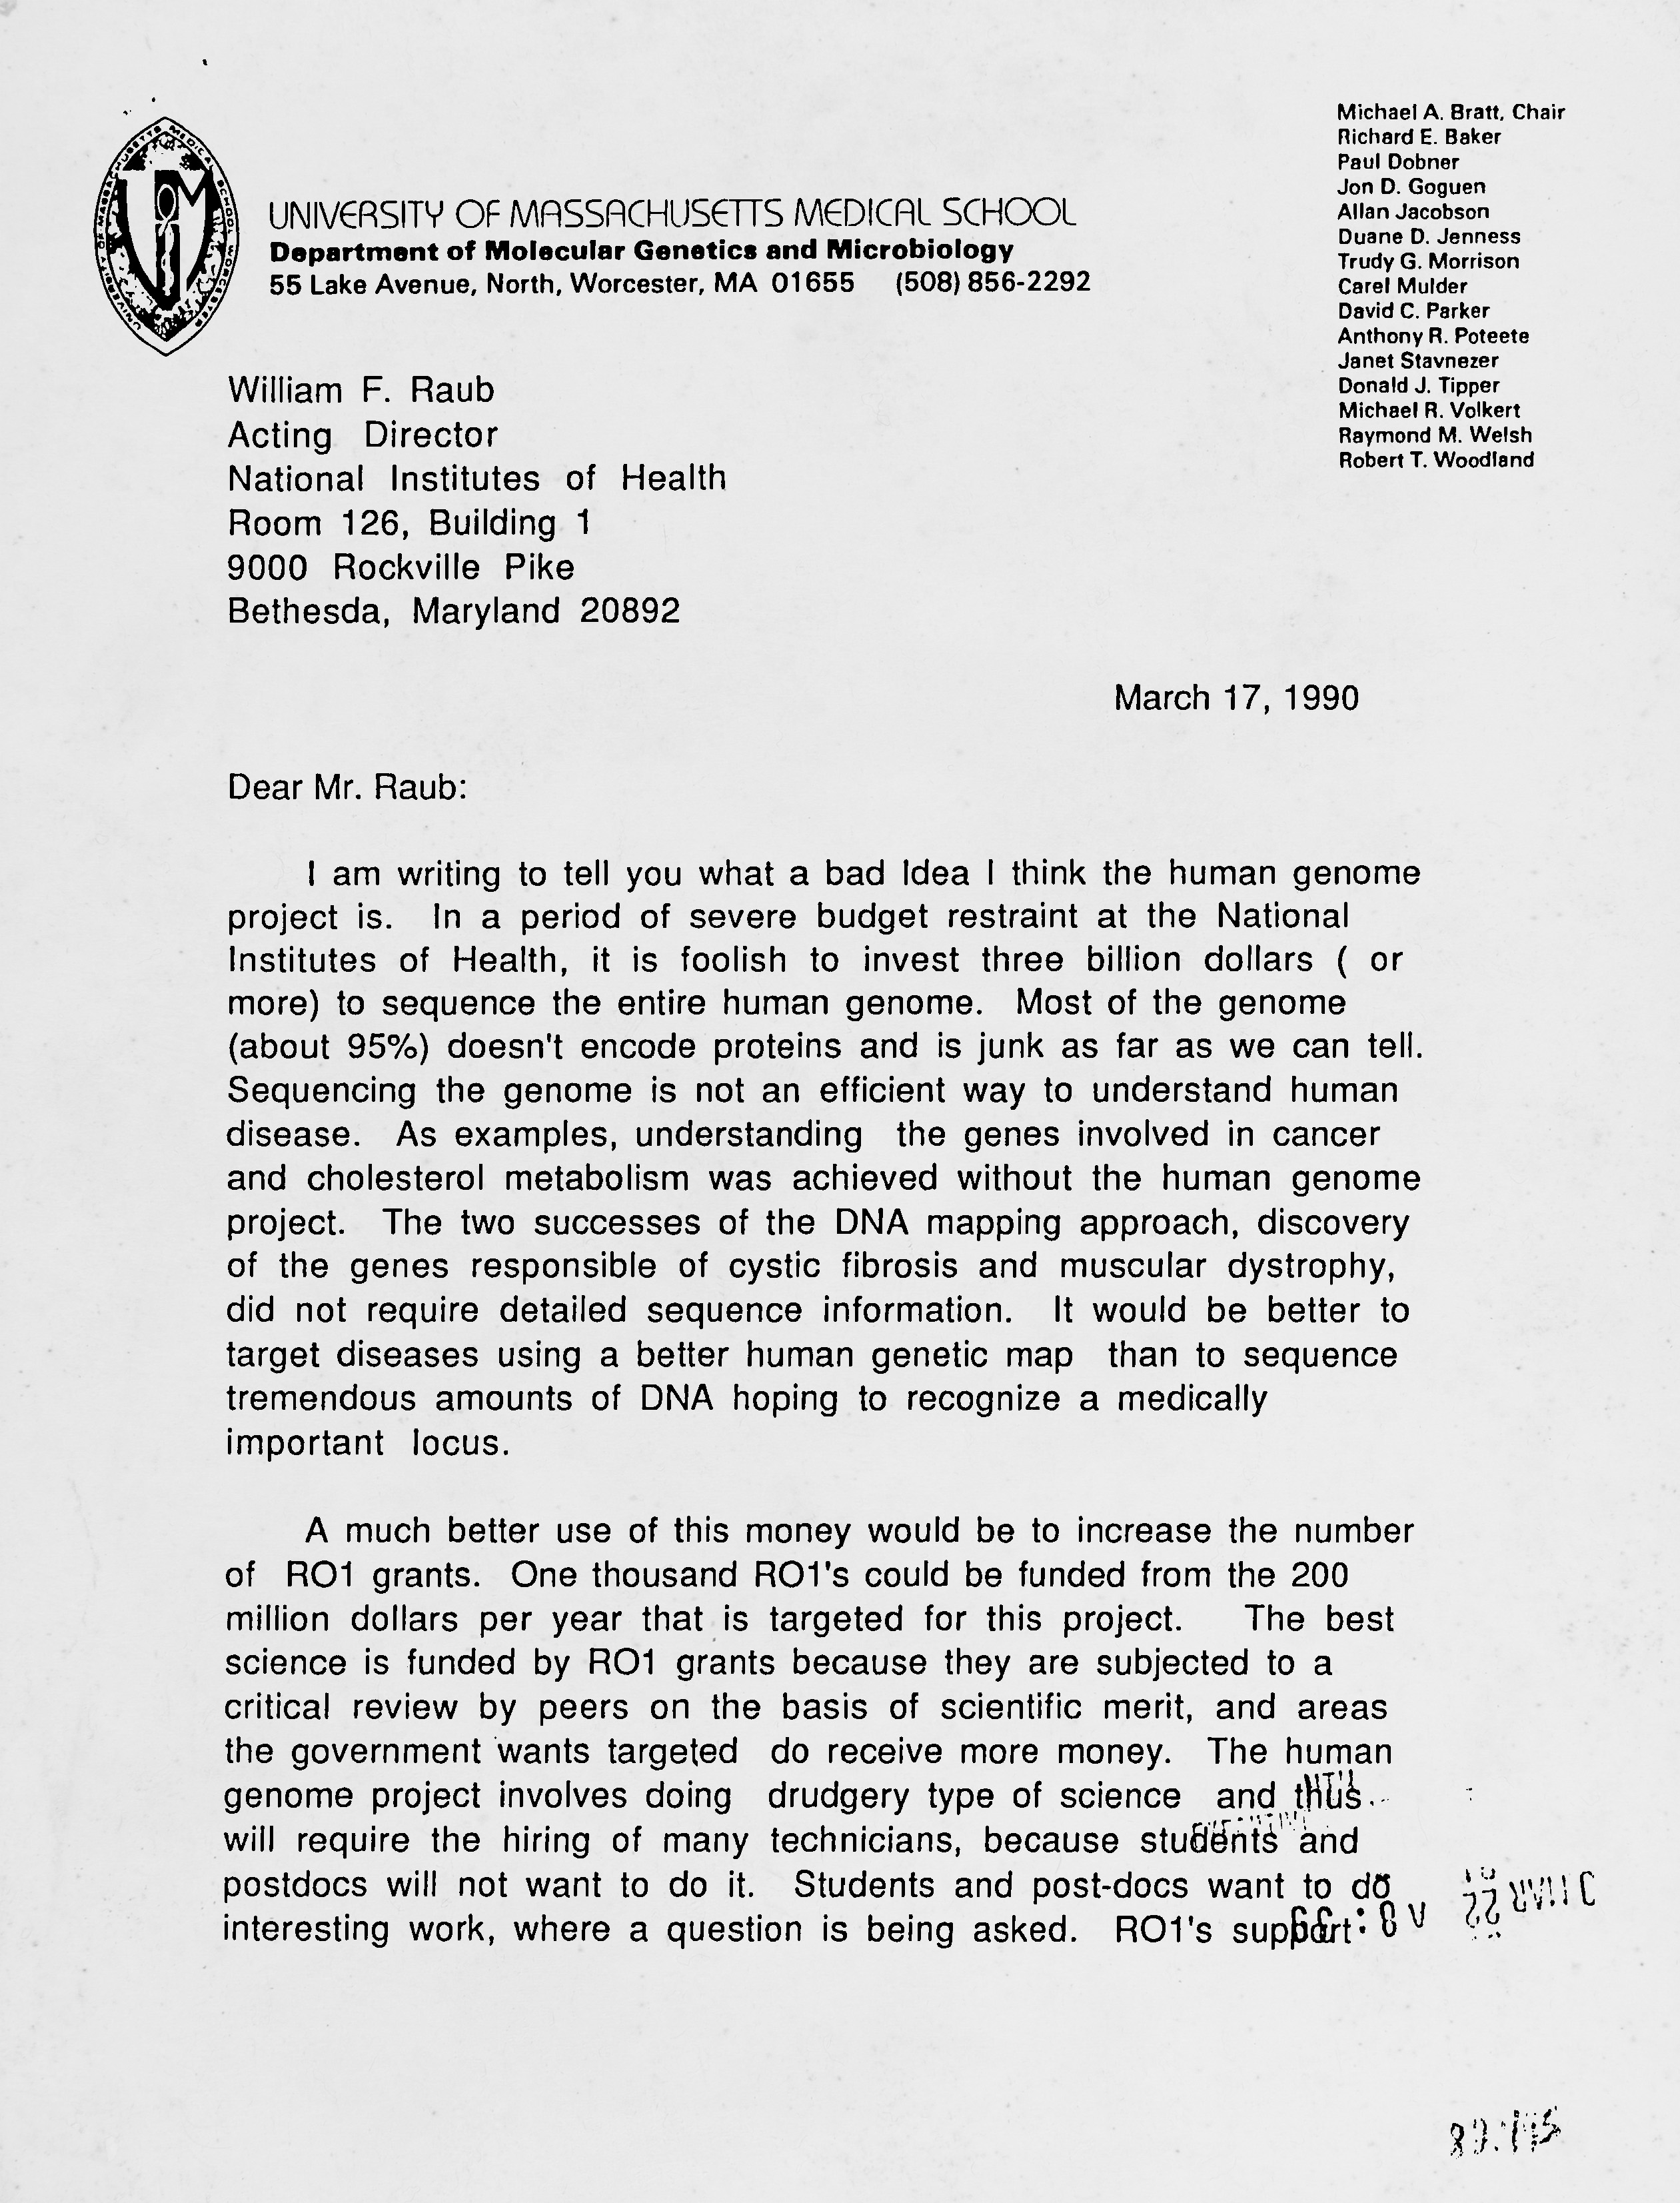 Anti-HGP Letter from Janet Stavnezer